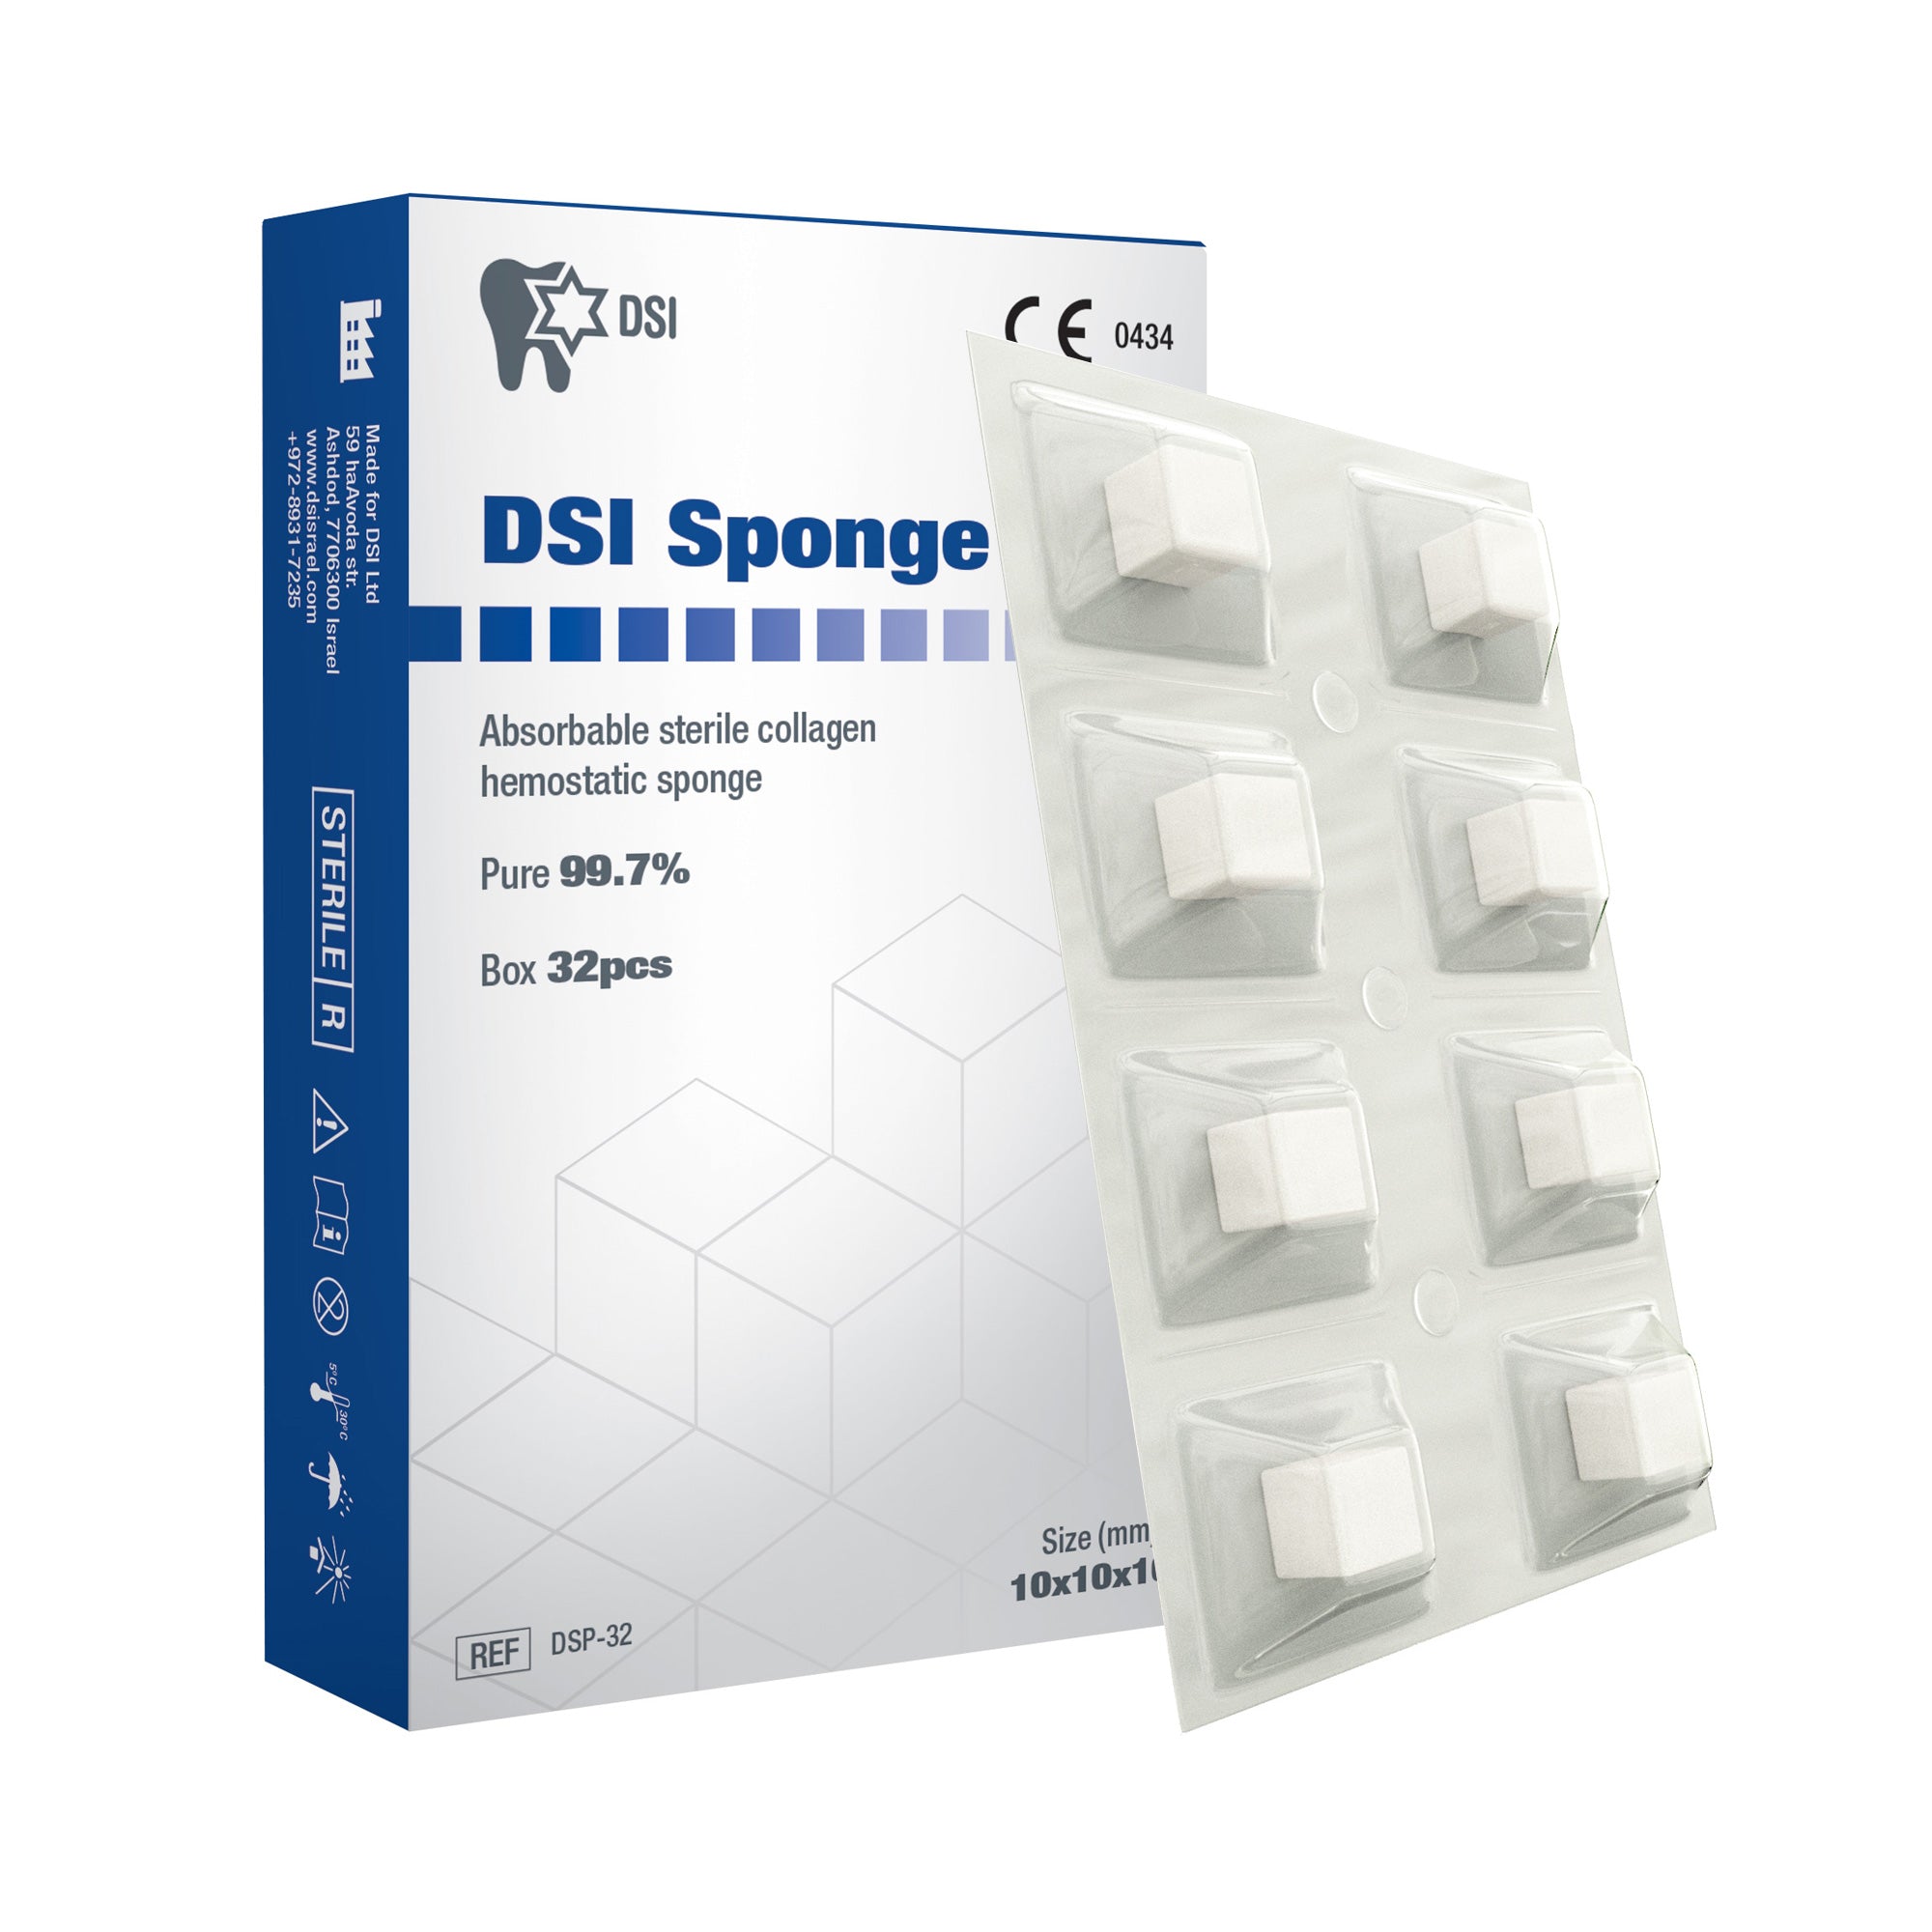 DSI Sponge Hemostatic Collagen Gelatin Sterile Cubes 10x10mm